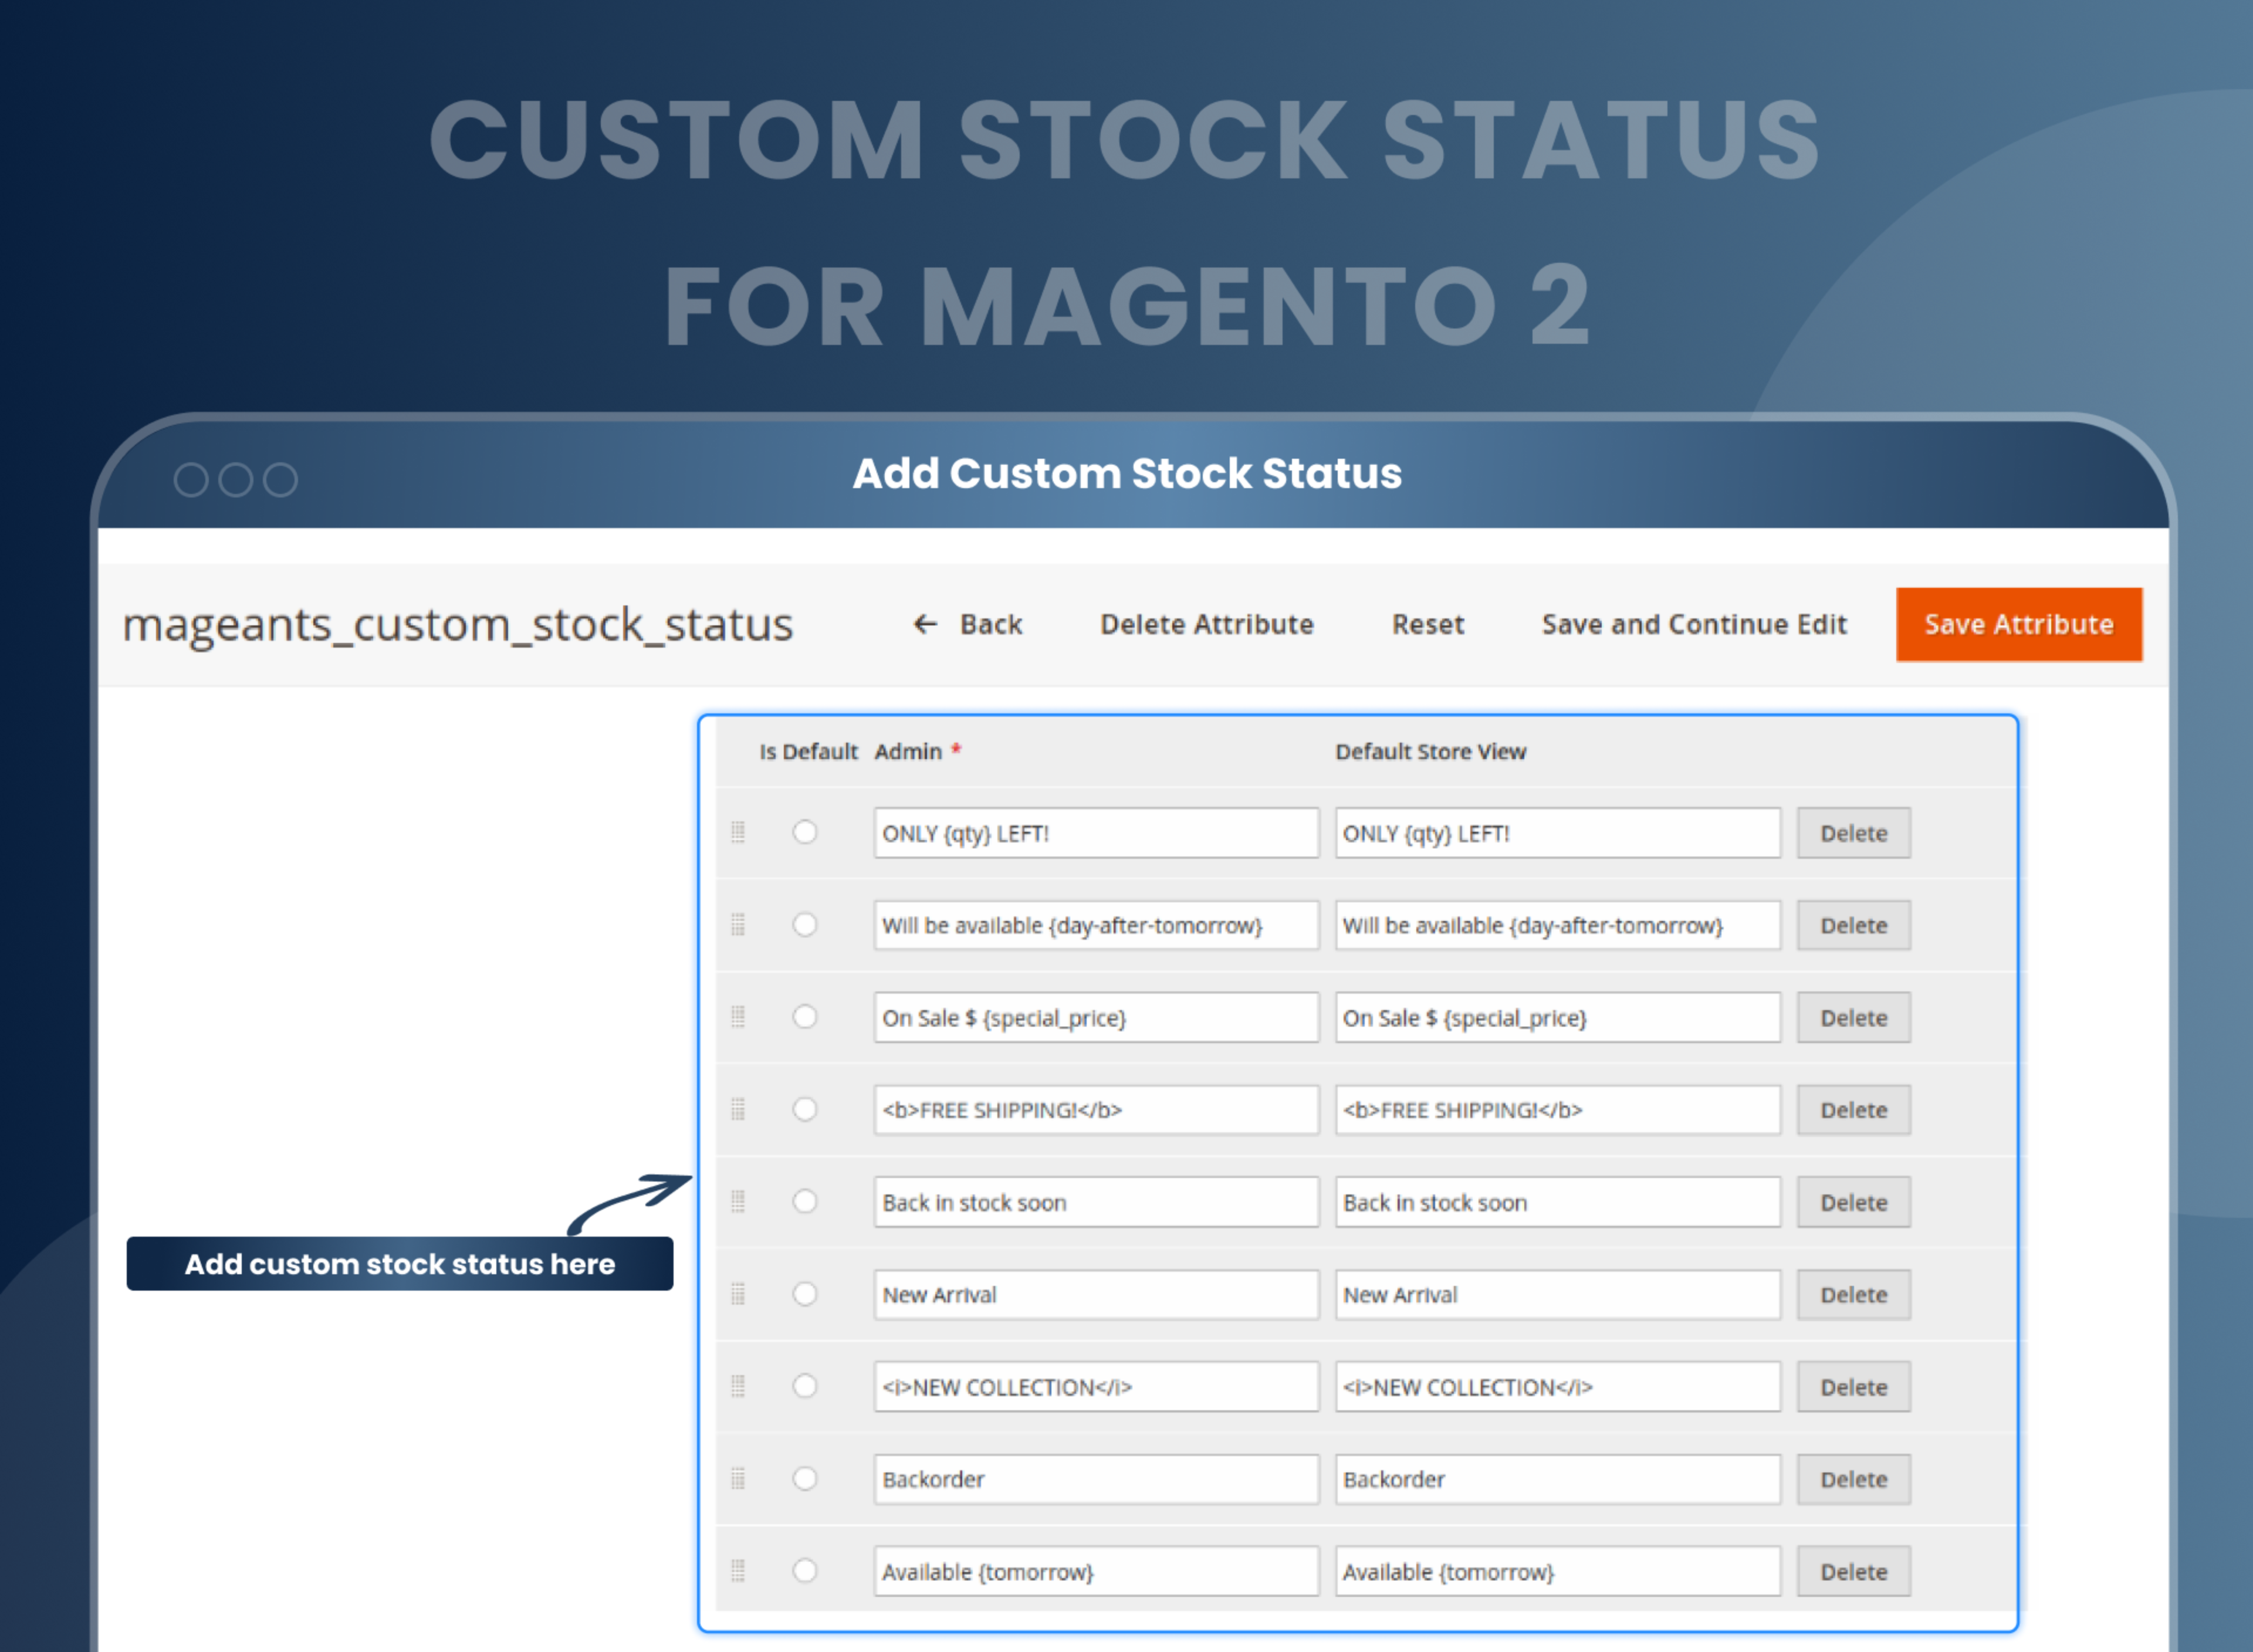 Add Custom Stock Status